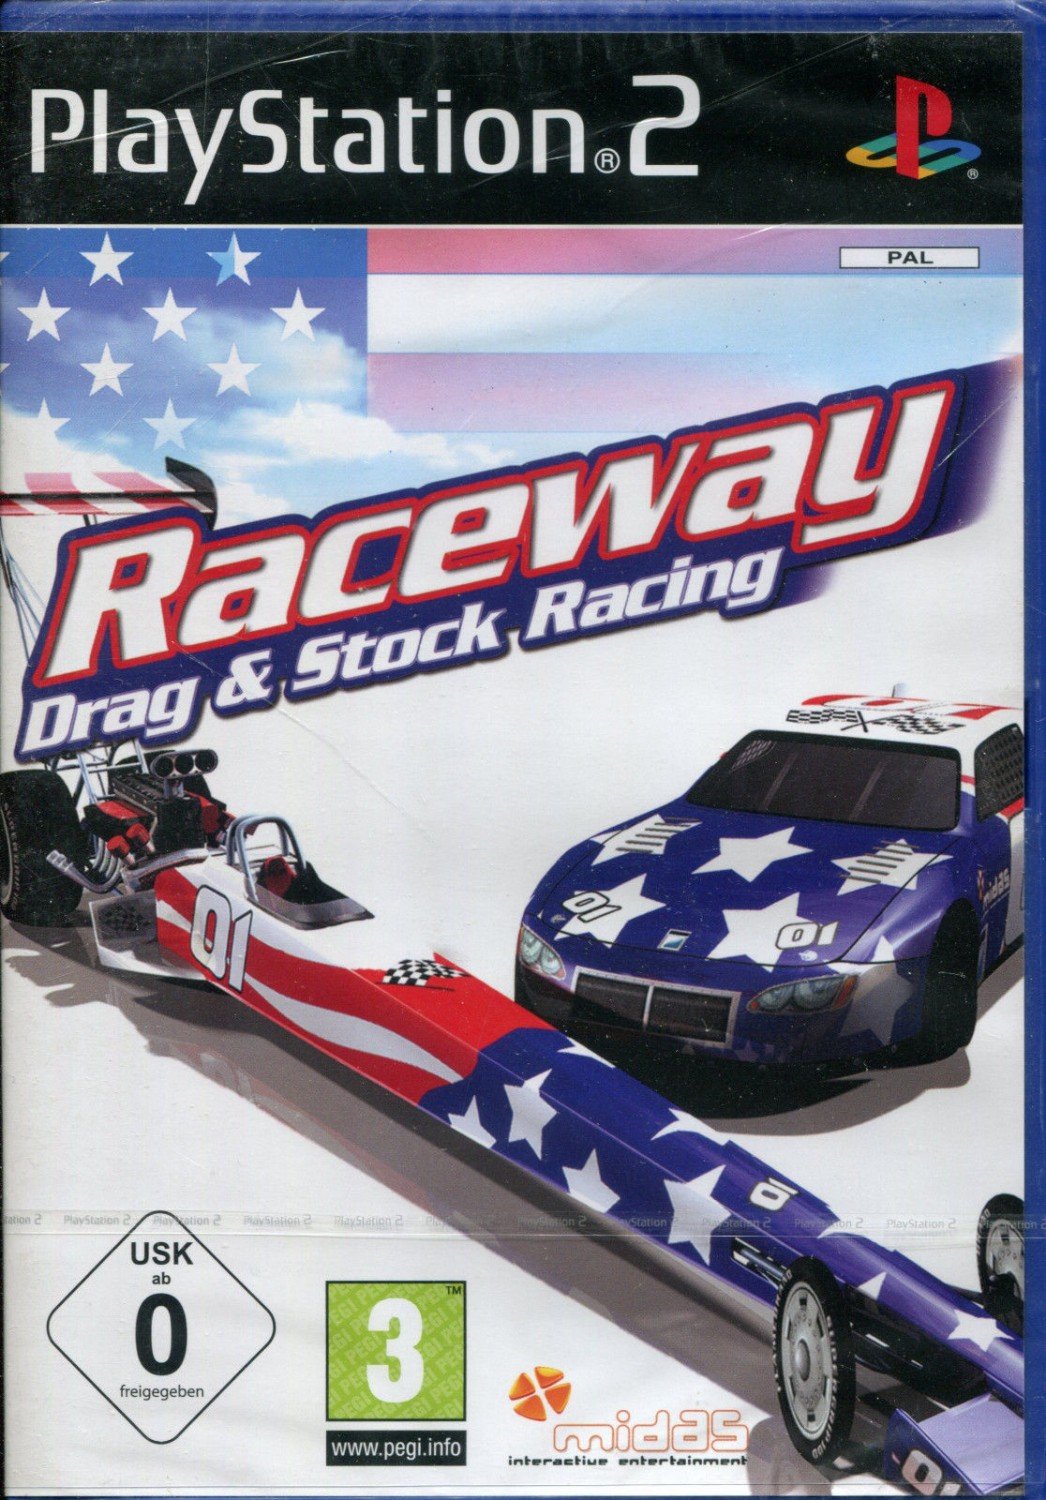 Raceway Drag&Stock Racing